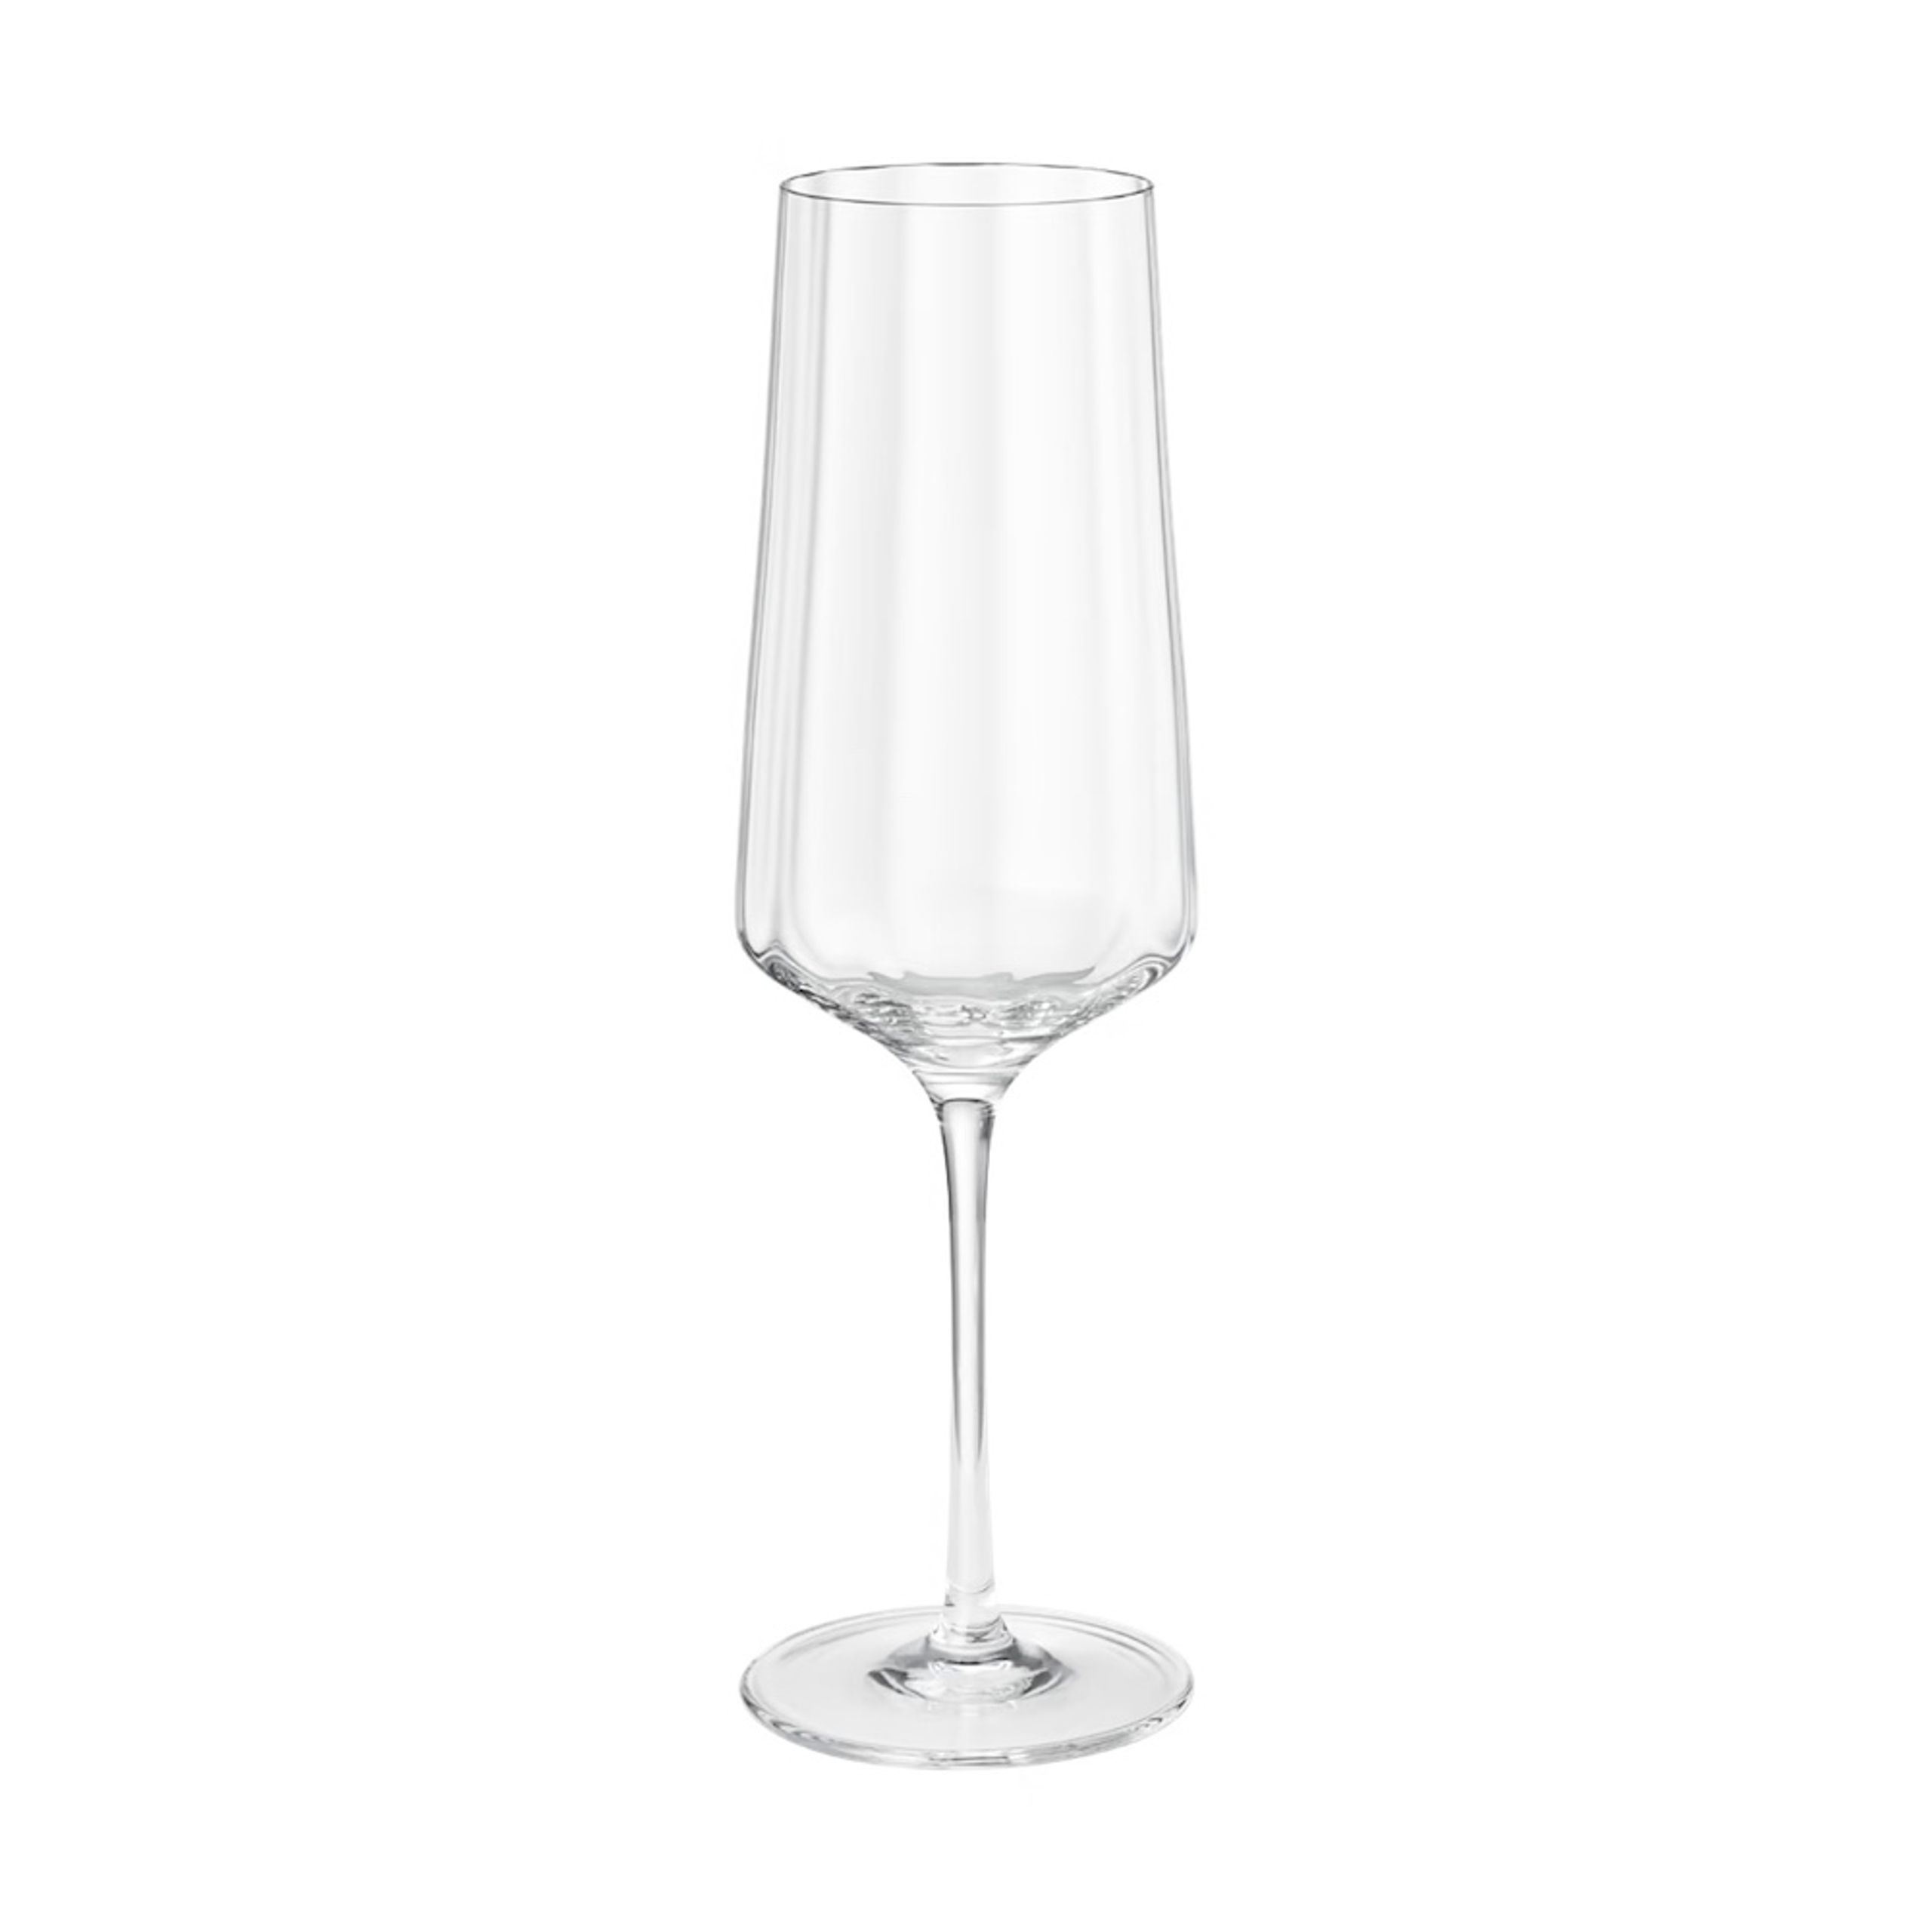 Georg Jensen - Copo de champanhe - Bernadotte Champagne Flute Glass - Clear Glass